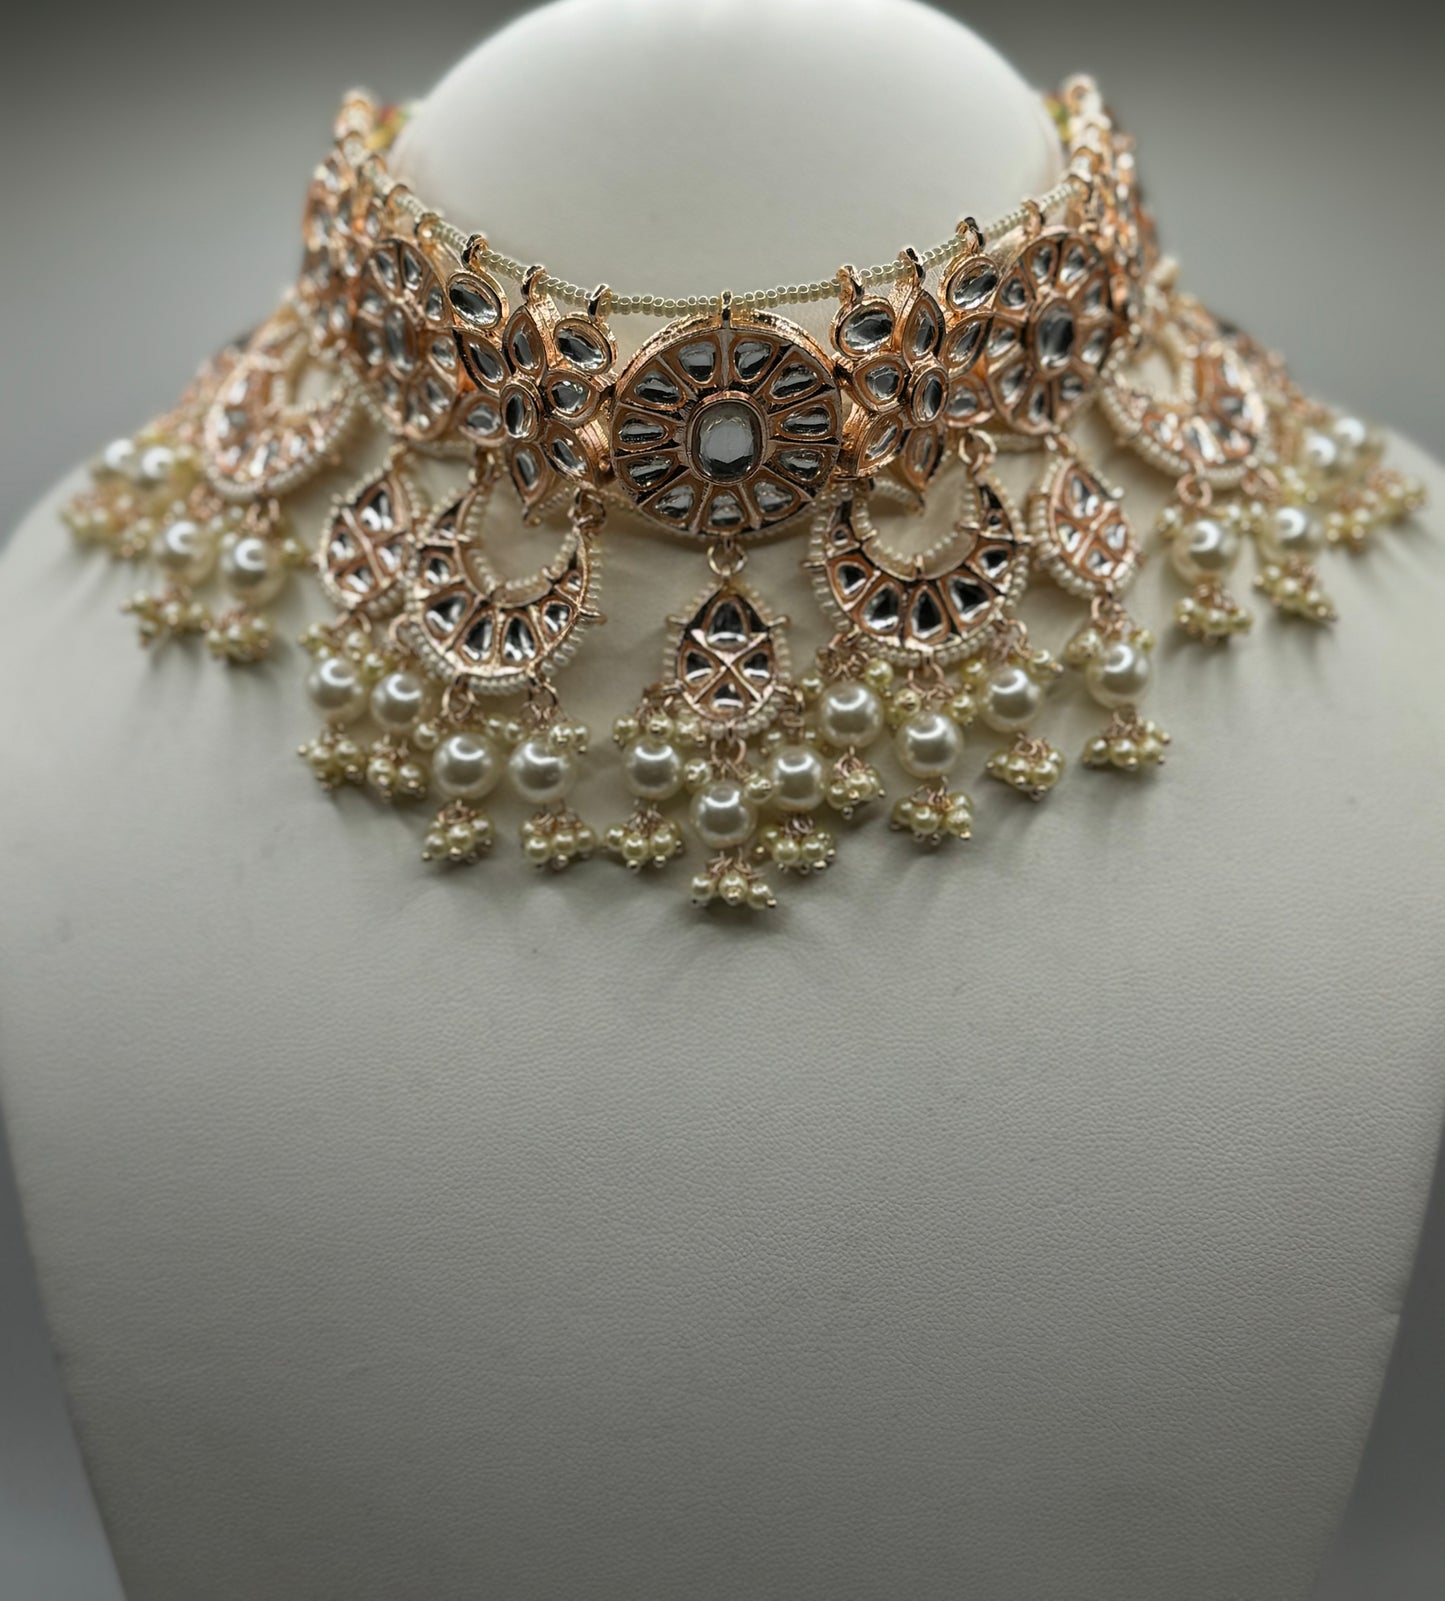 Luna necklace set